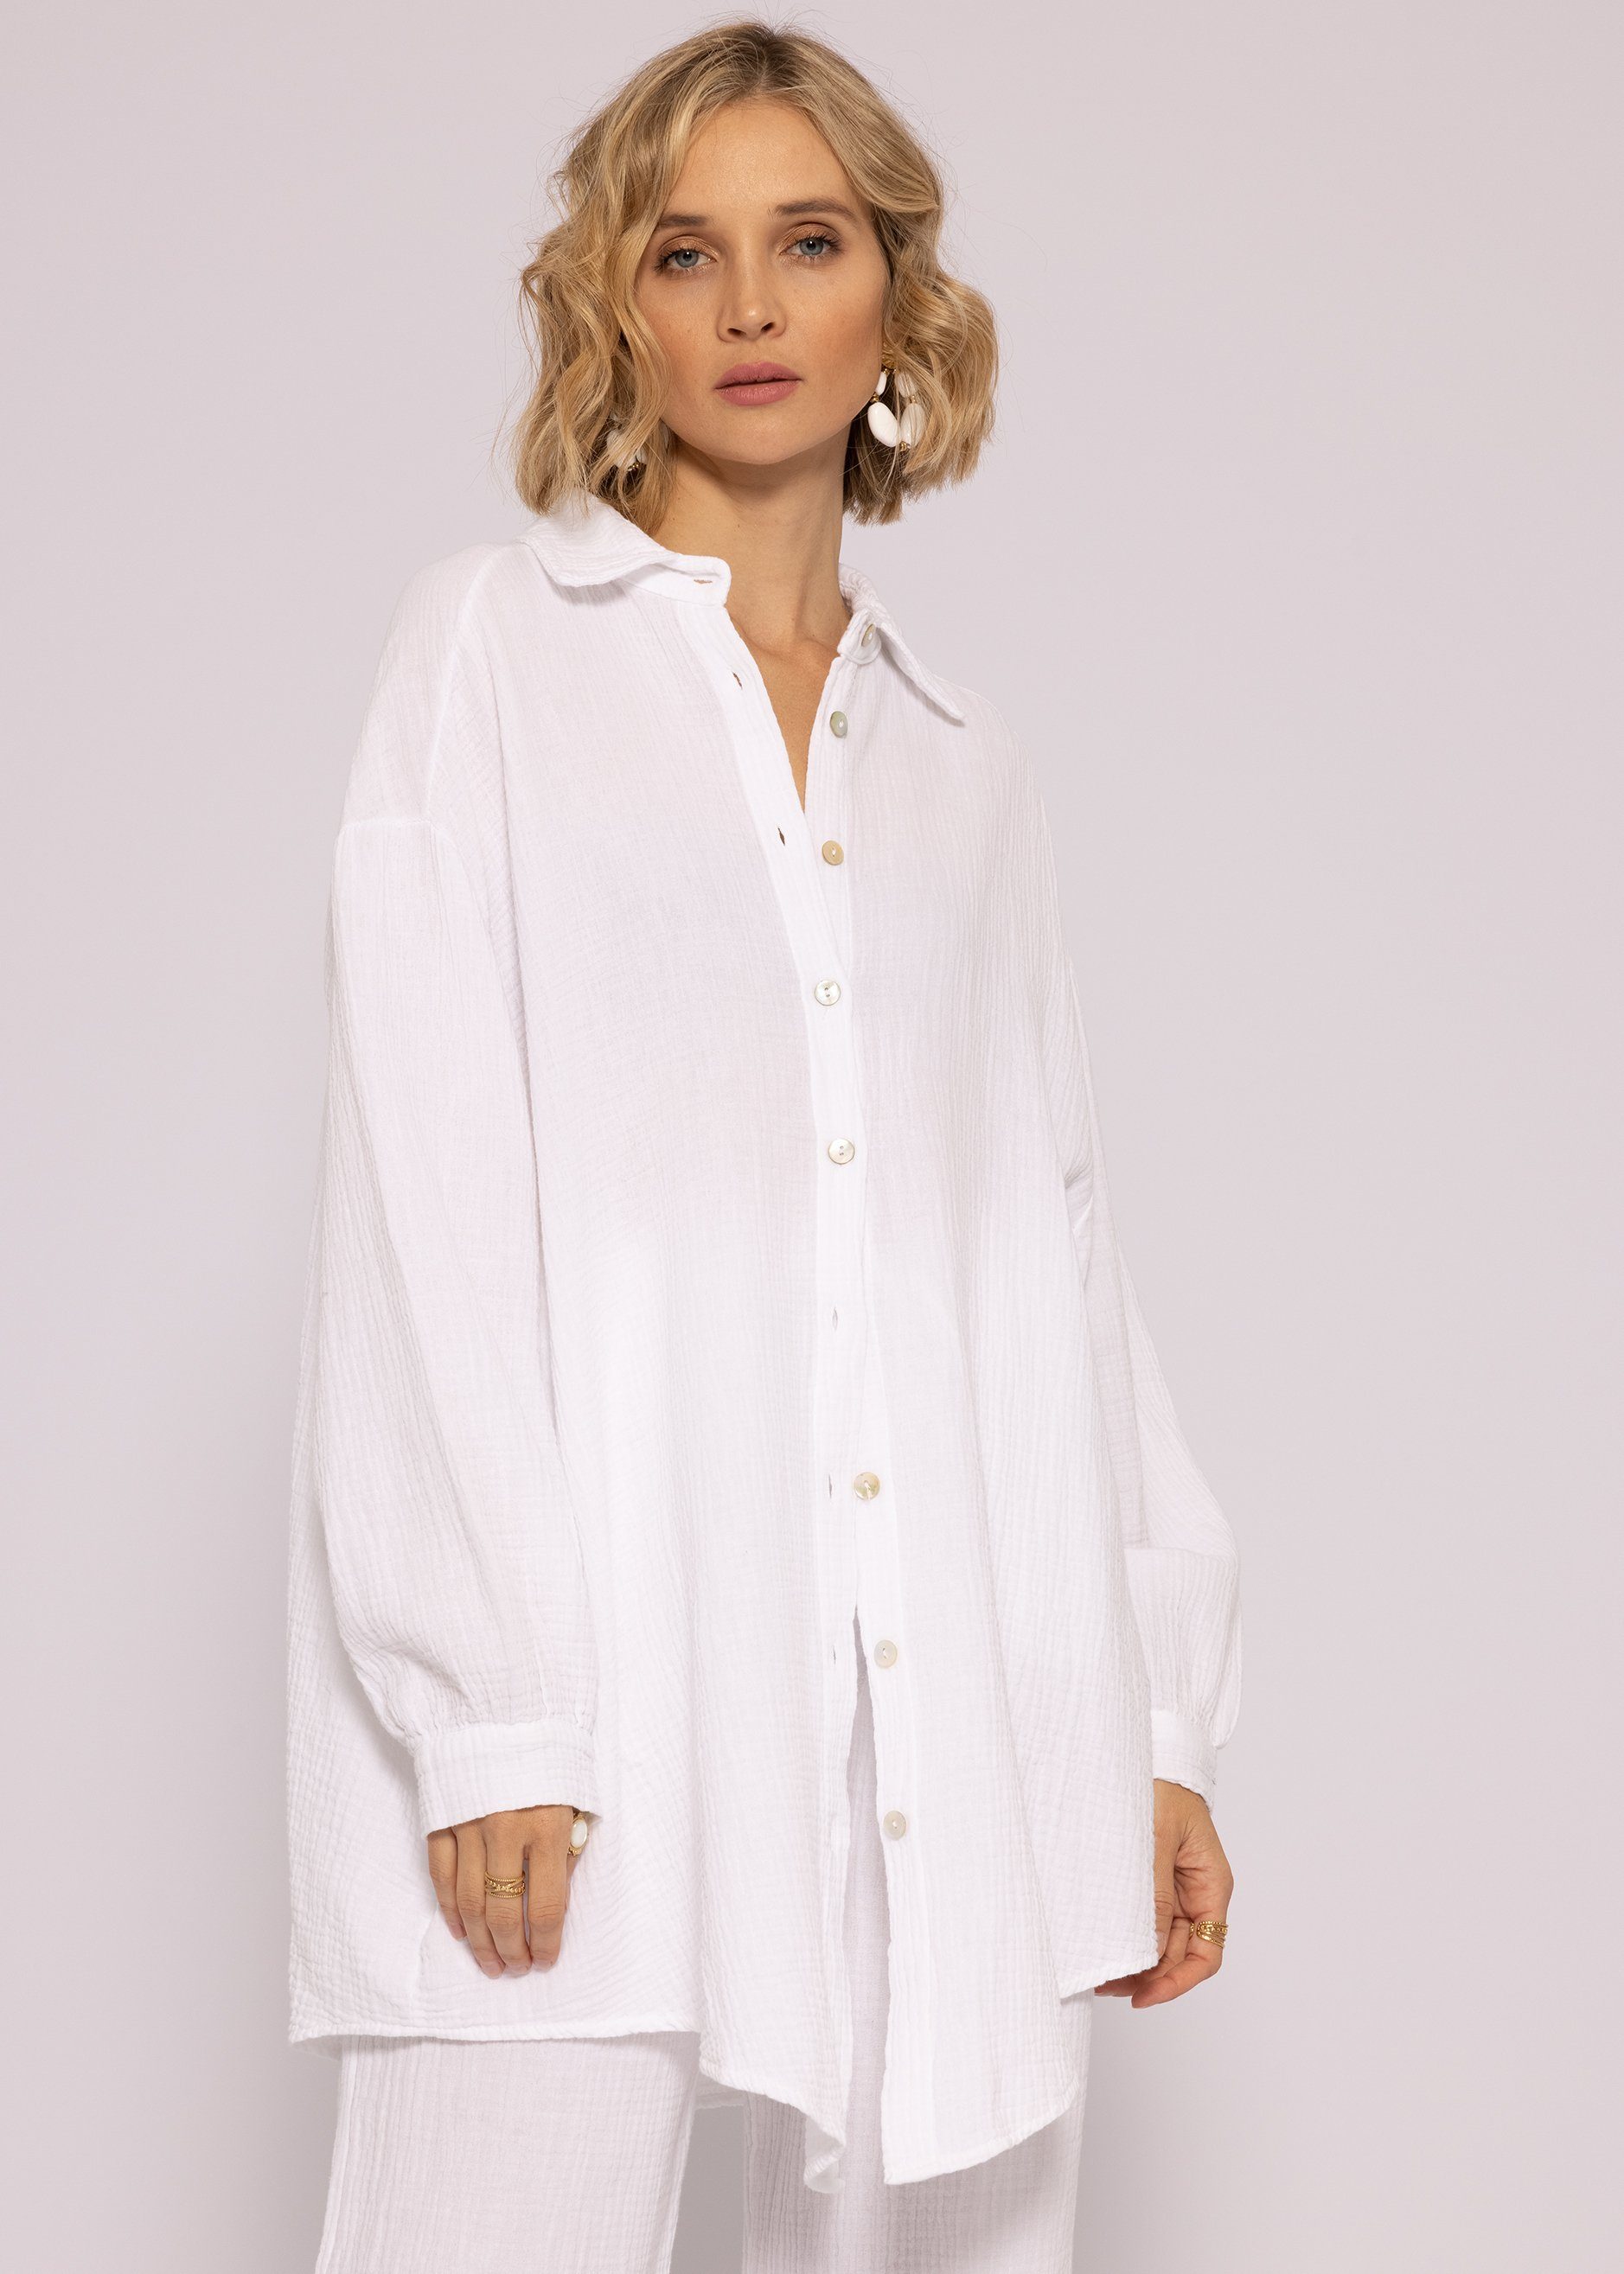 SASSYCLASSY Longbluse Oversize Musselin Bluse Damen Langarm Hemdbluse lang aus Baumwolle mit V-Ausschnitt Weiß